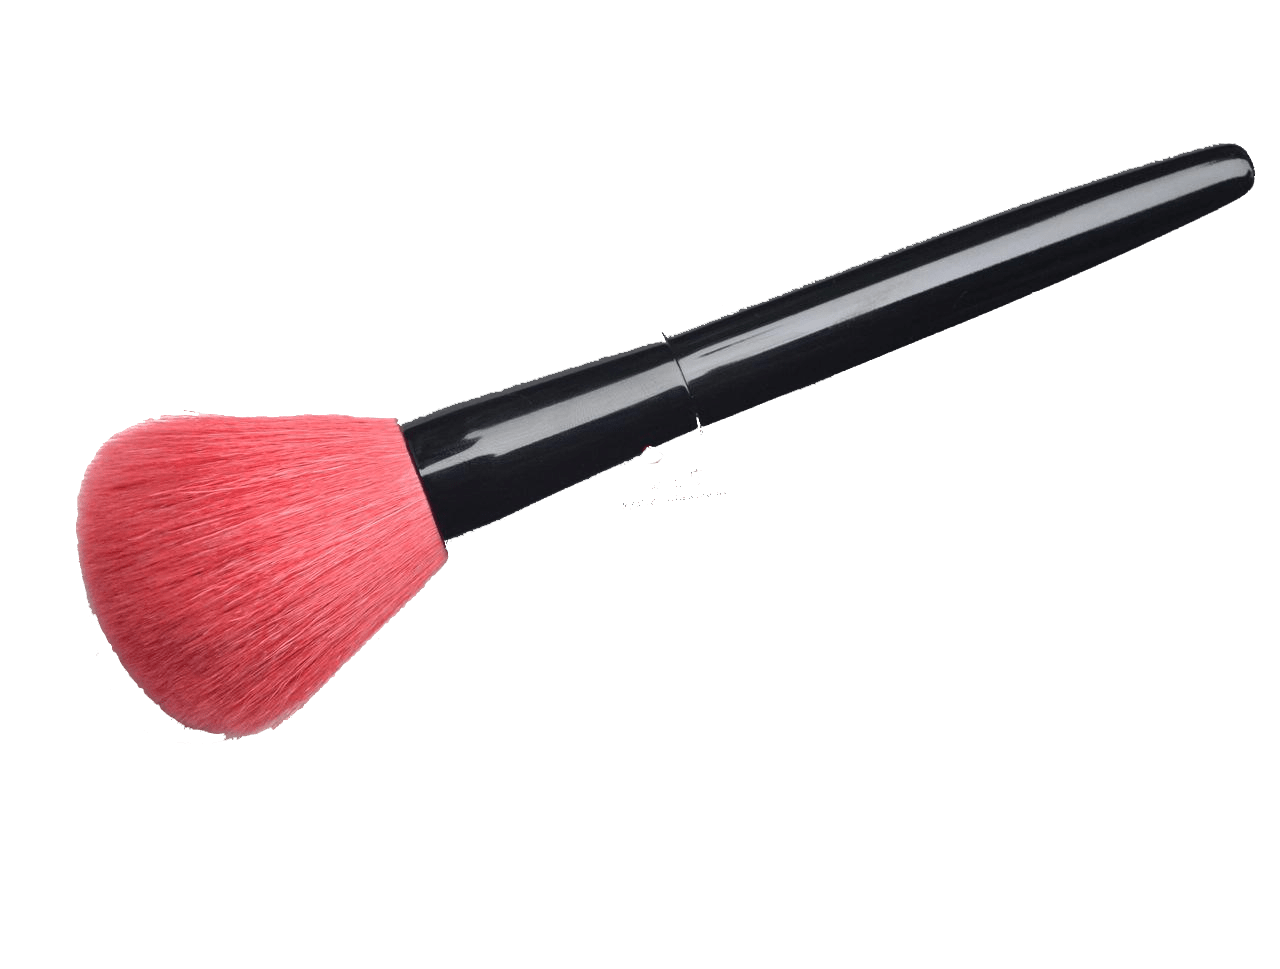 Makeup Brush HQ Image Free PNG Image